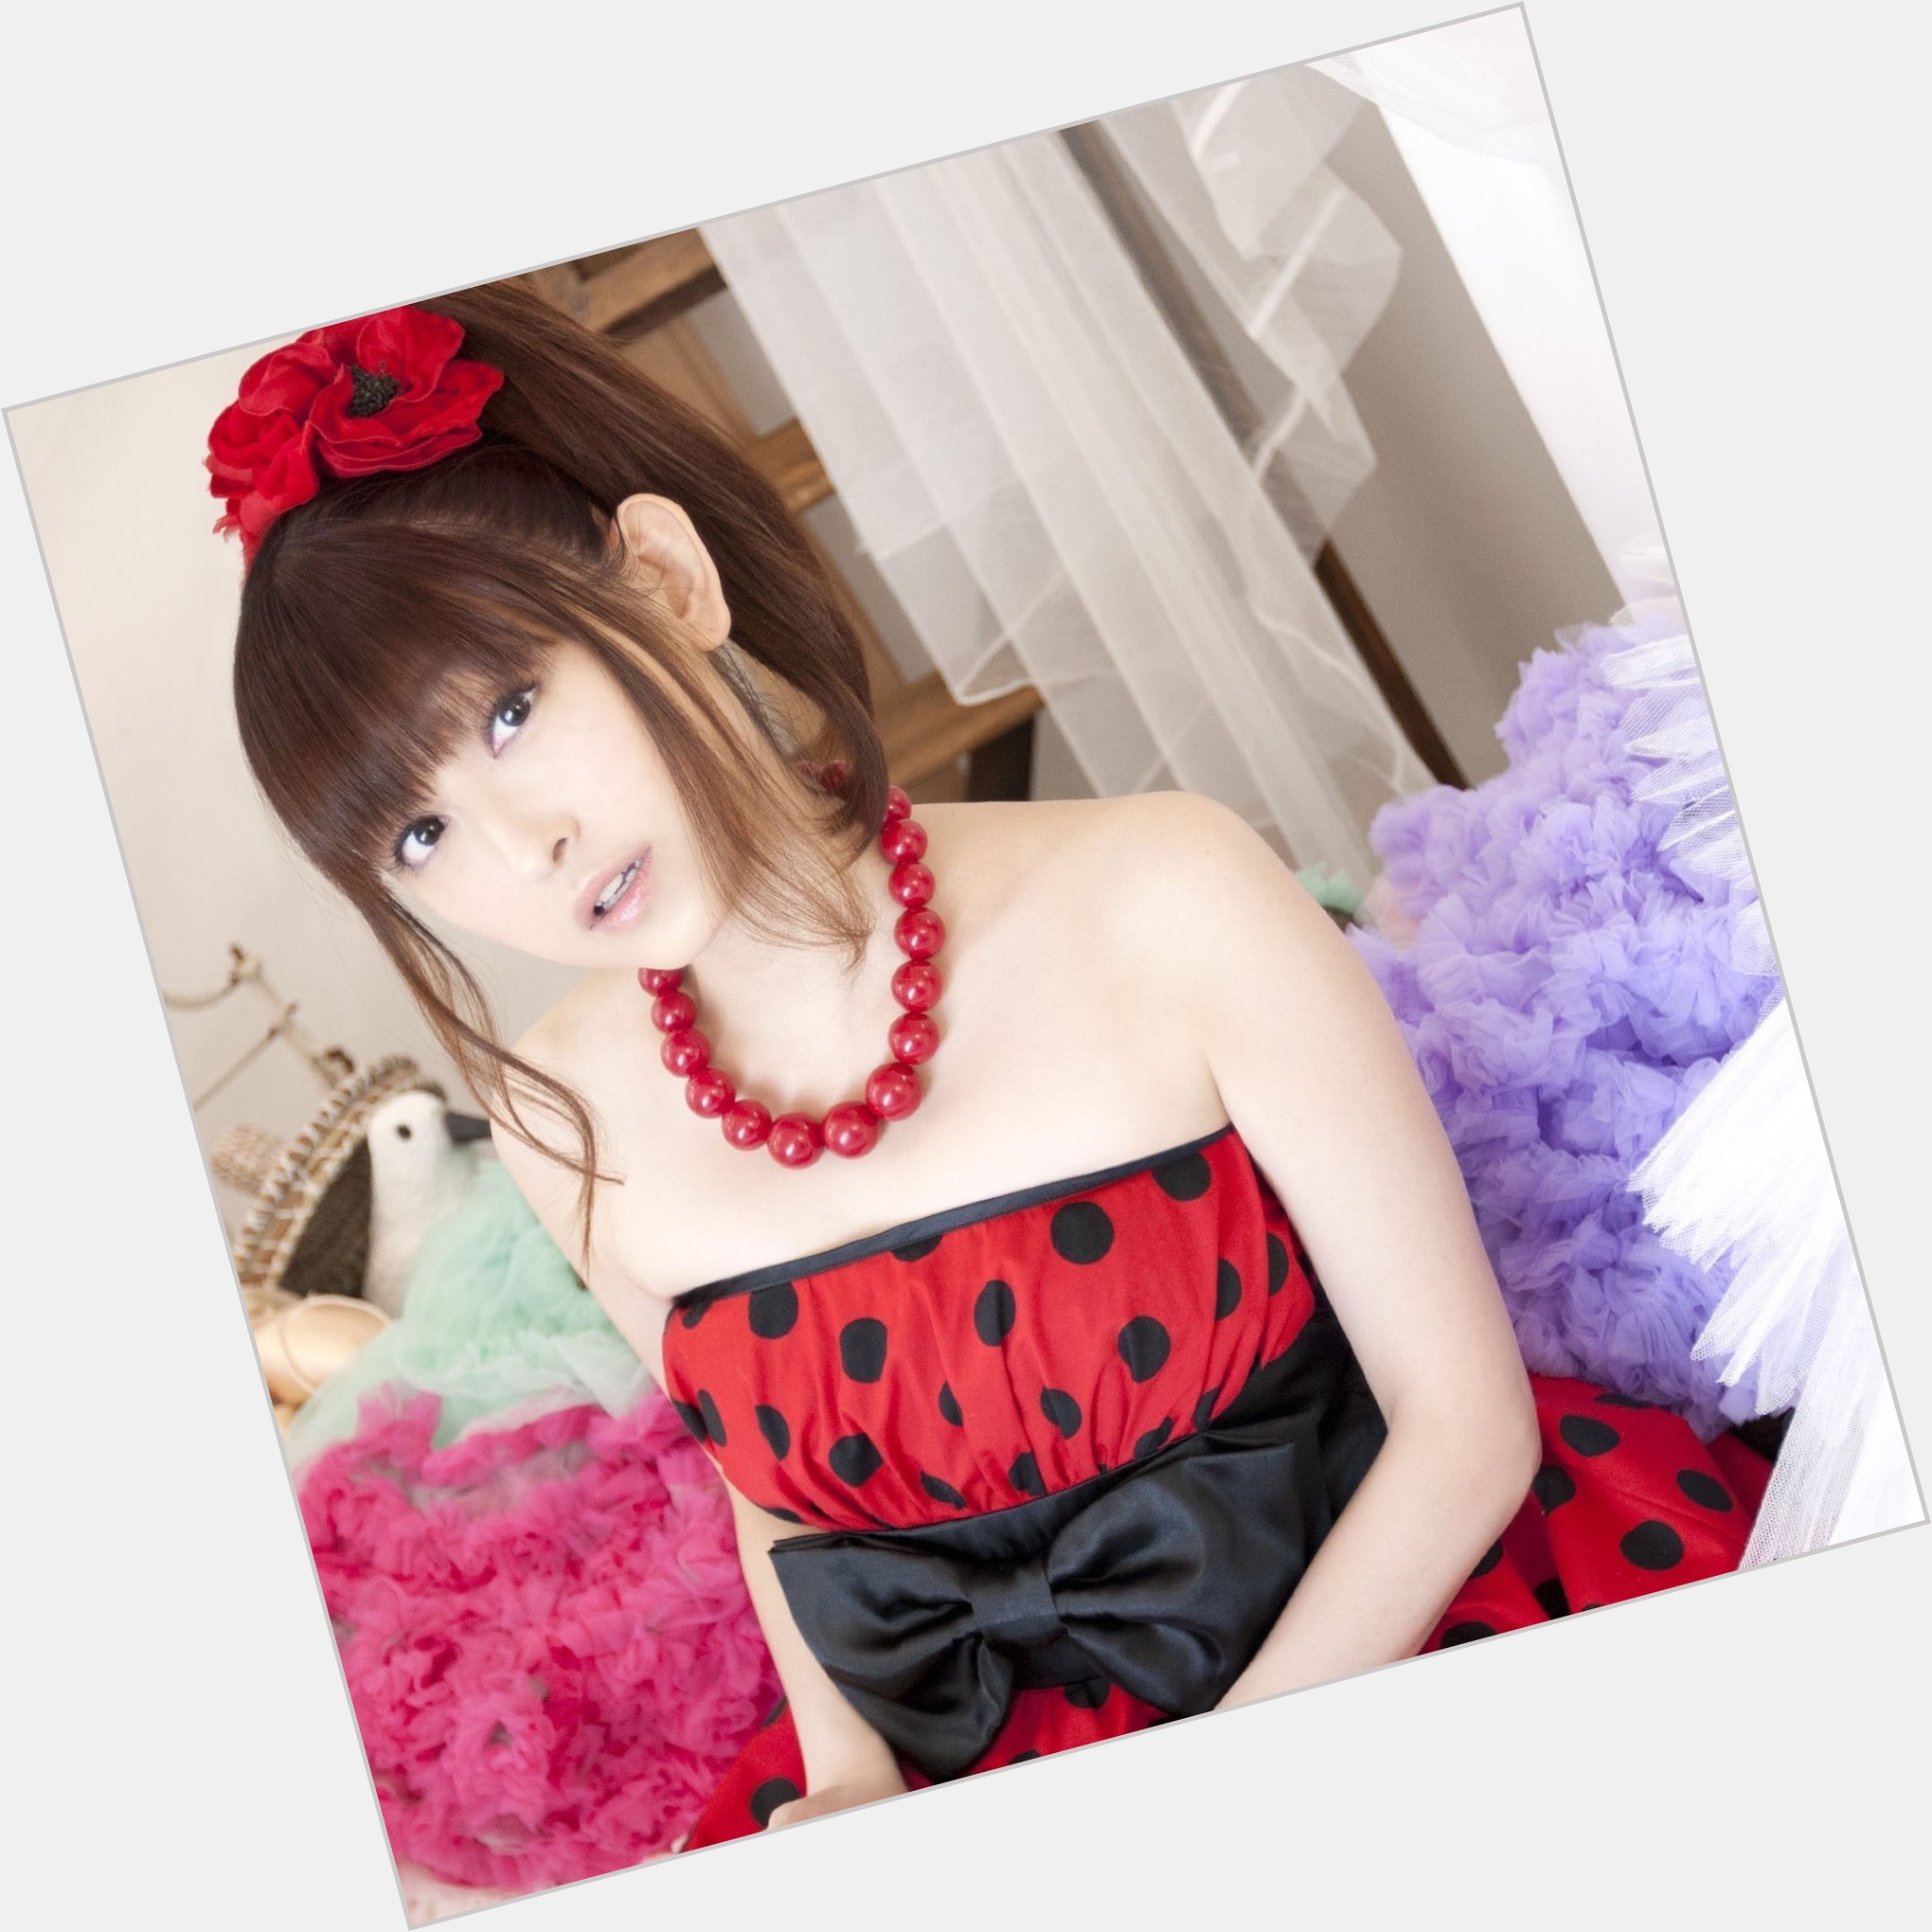 <a href="/hot-women/yukari-tamura/where-dating-news-photos">Yukari Tamura</a>  